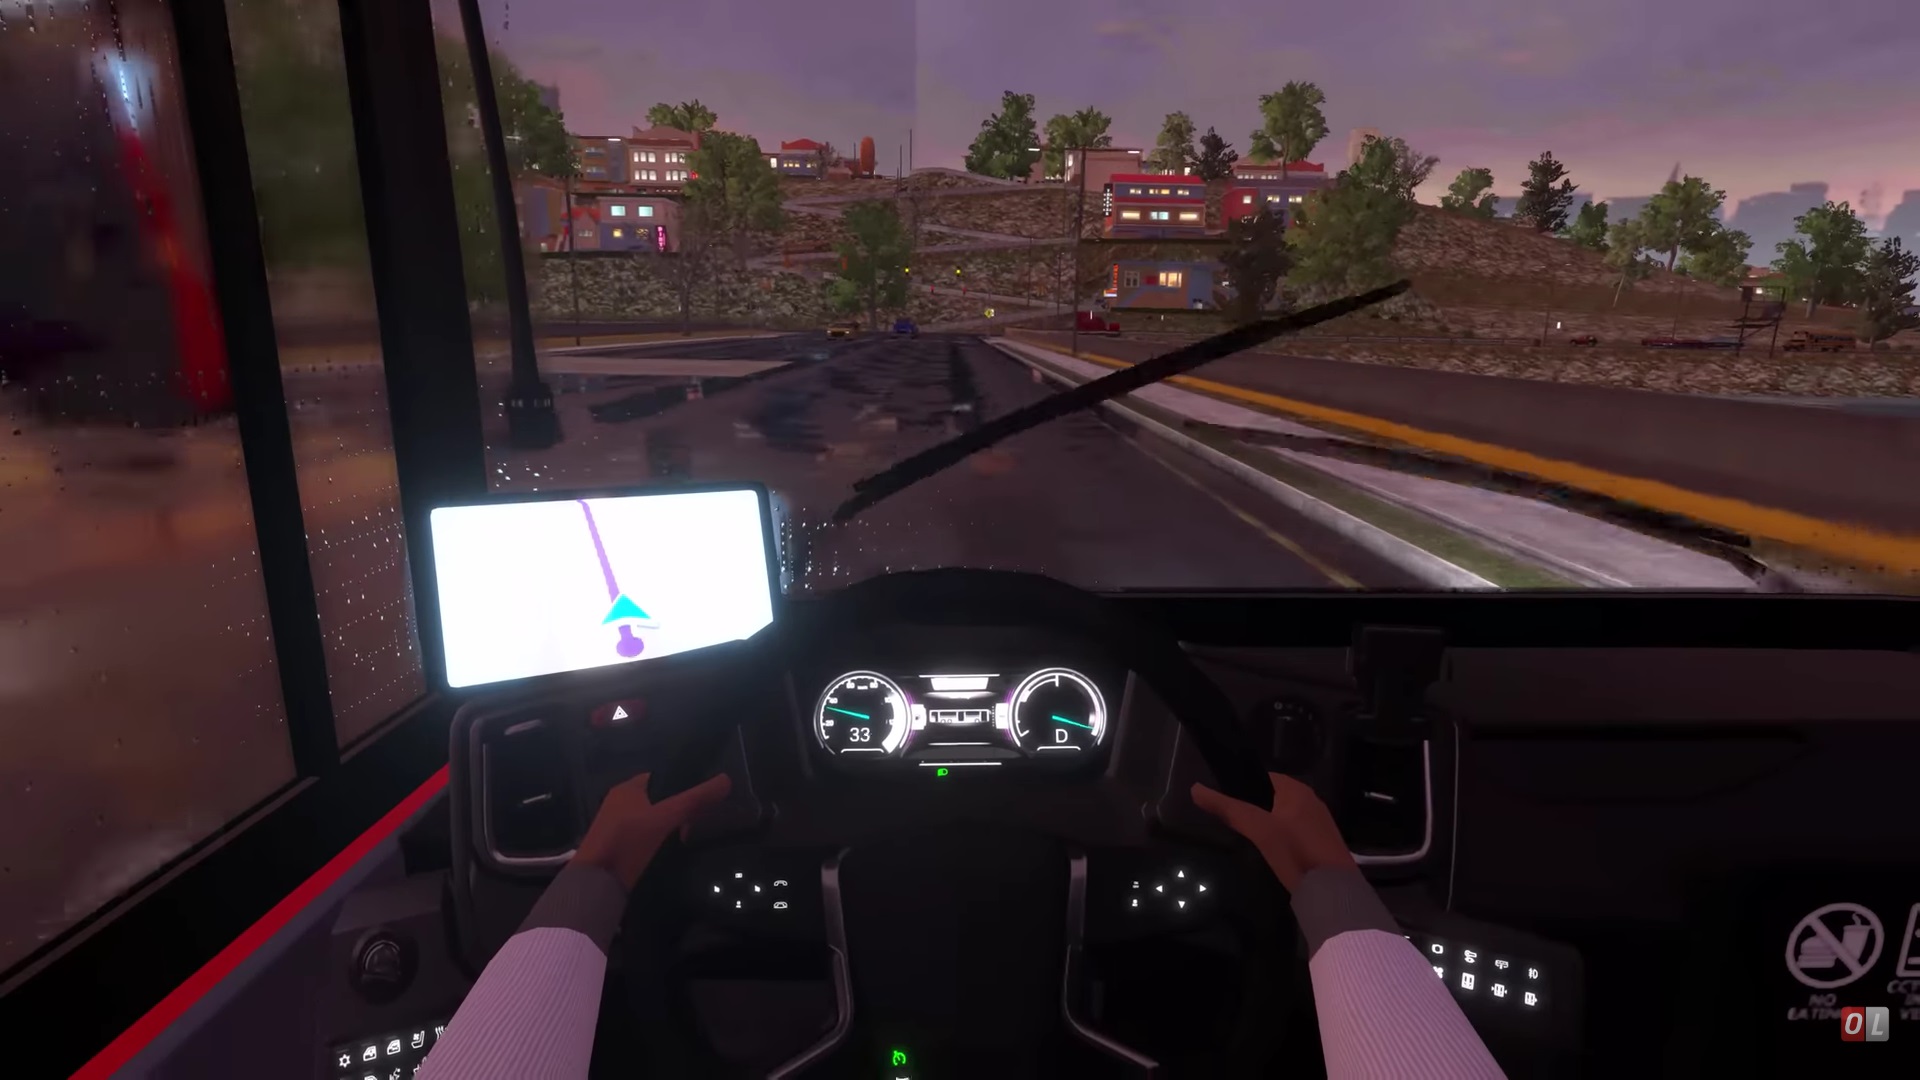 Bus Simulator 2023 на Андроид